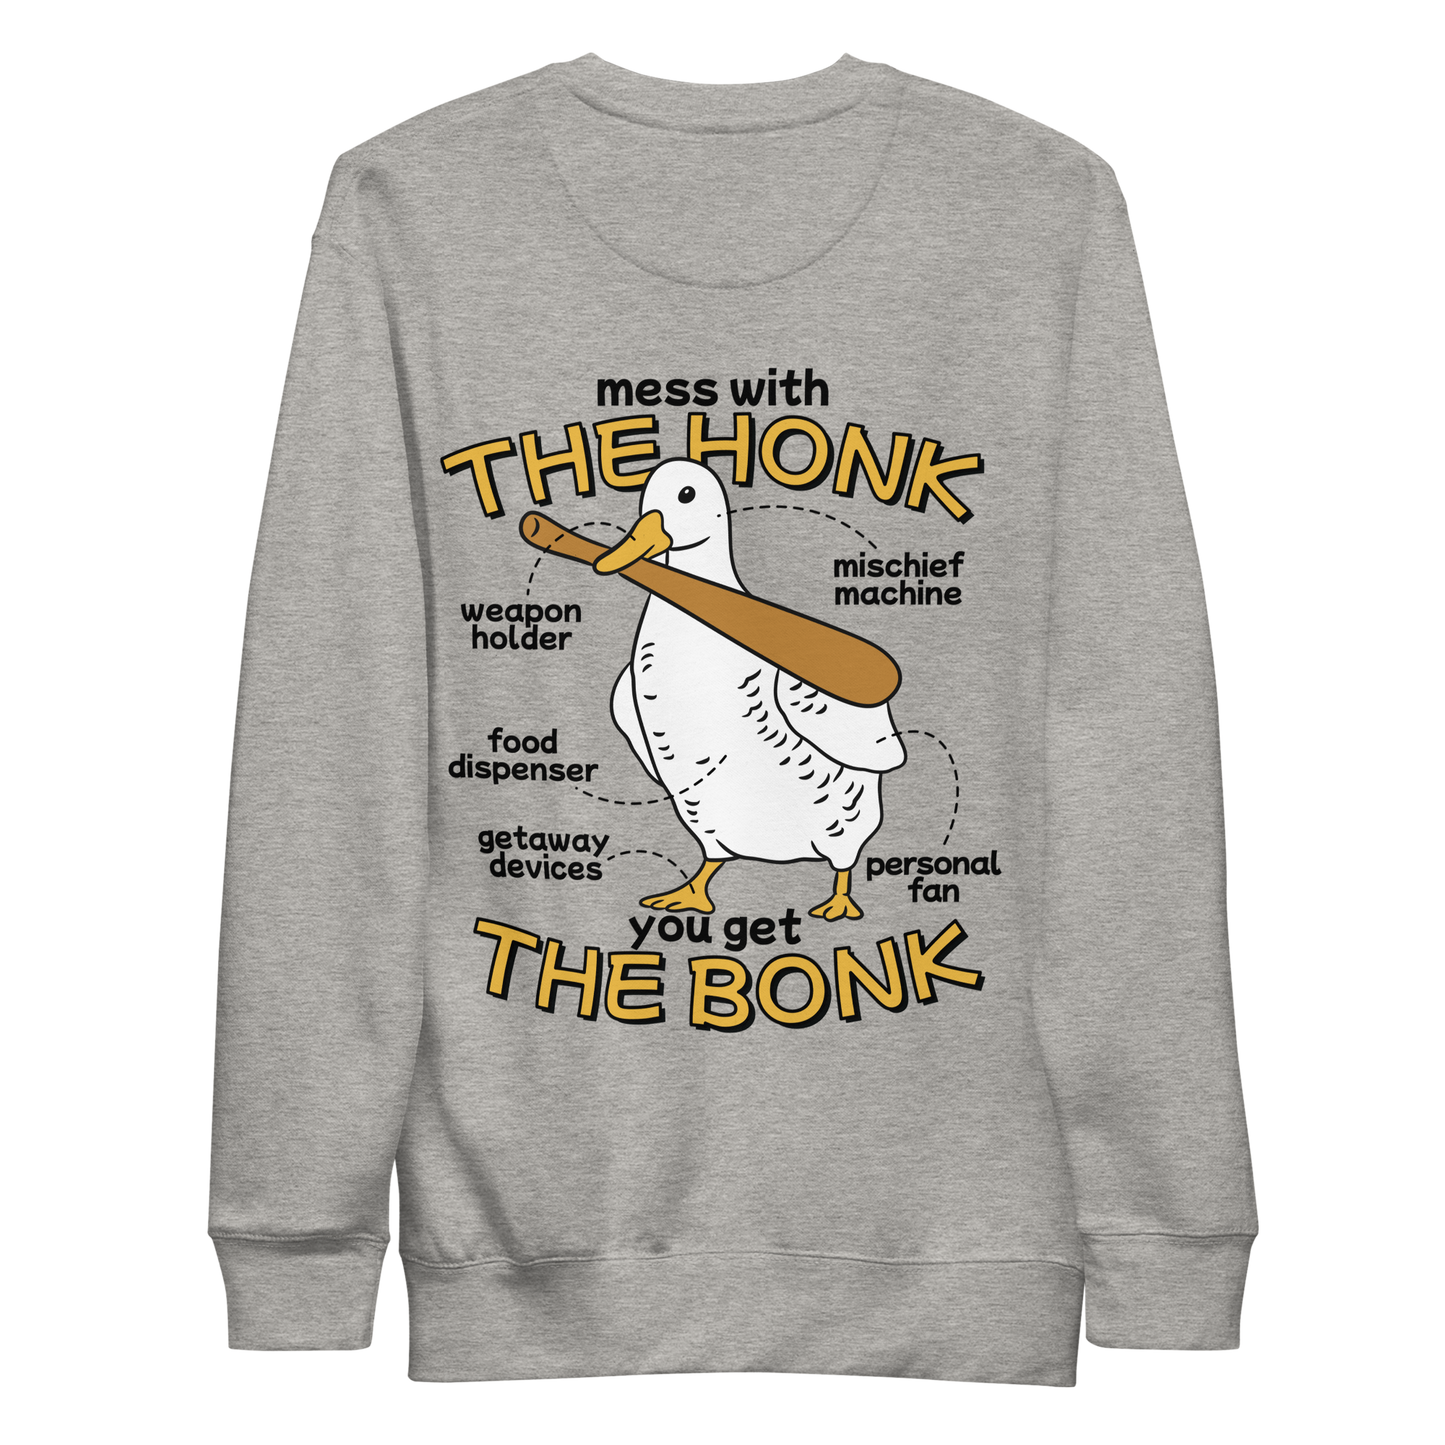 Duck animal with a bat | Unisex Premium Sweatshirt - F&B